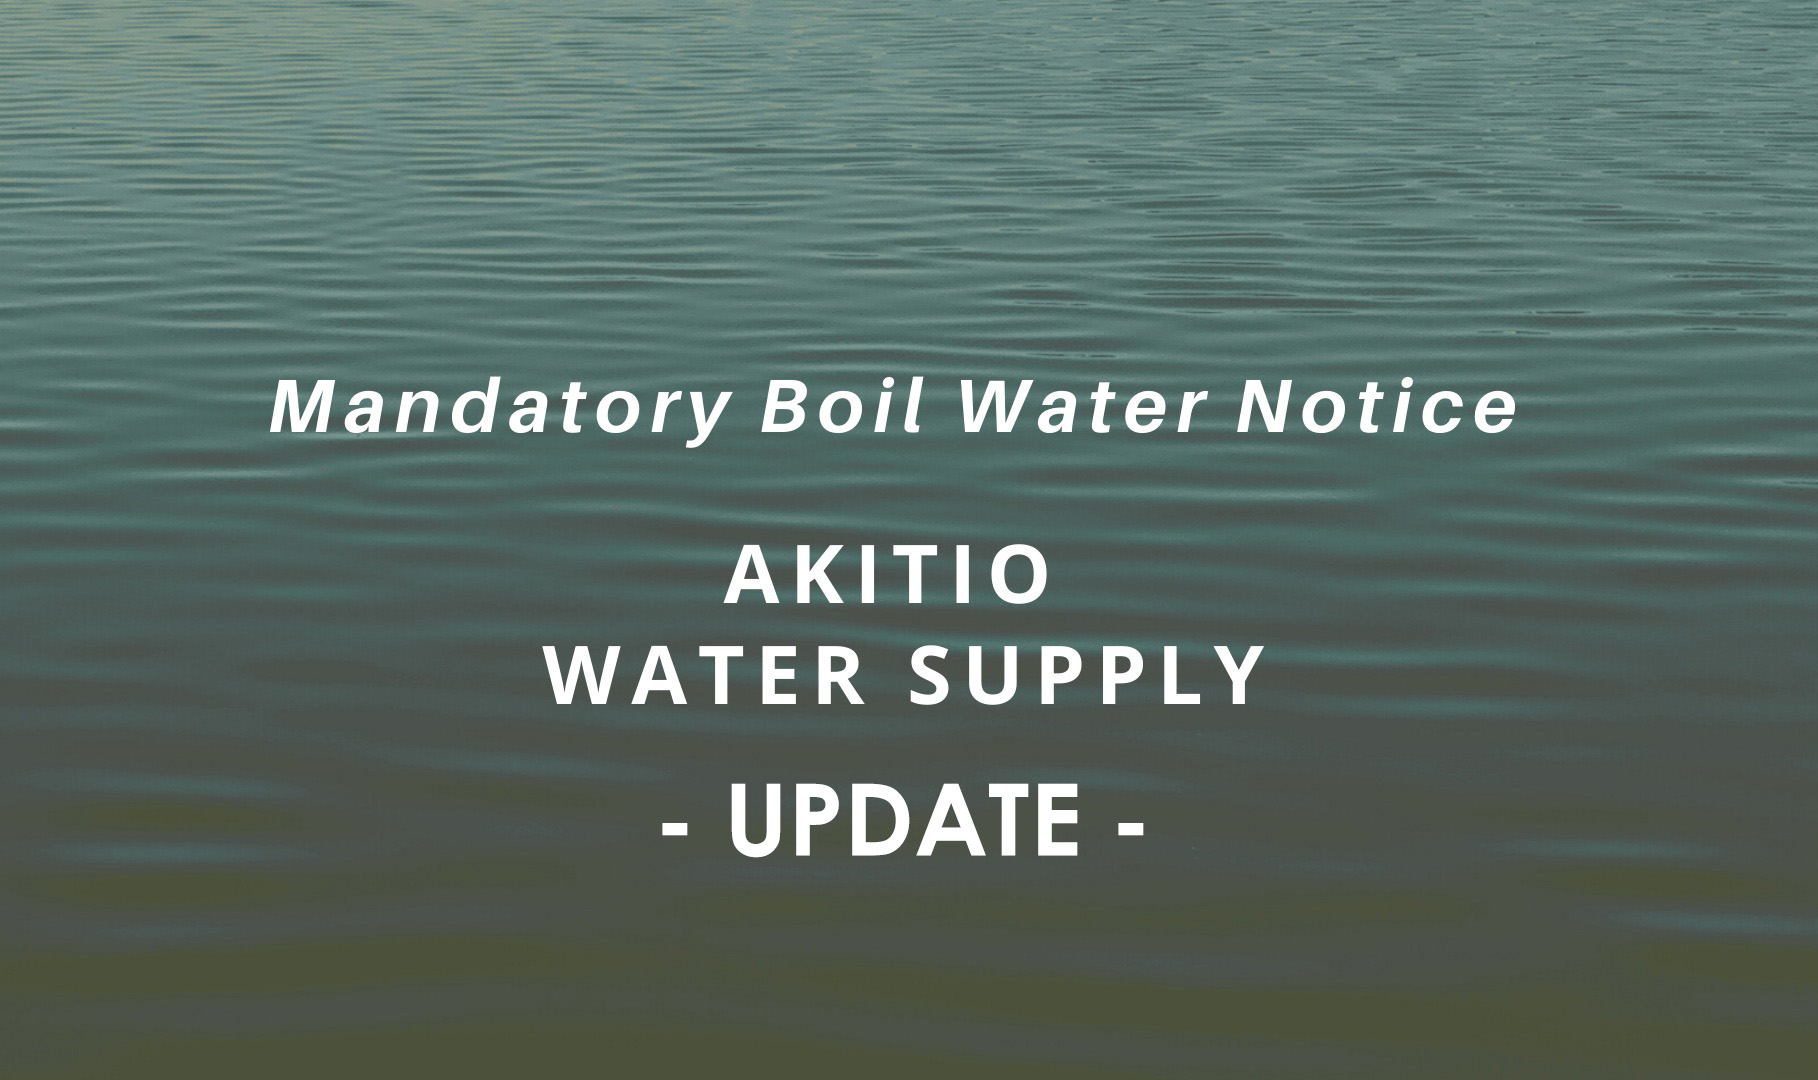 Mandatory Boil Water Notice: Akitio - Update